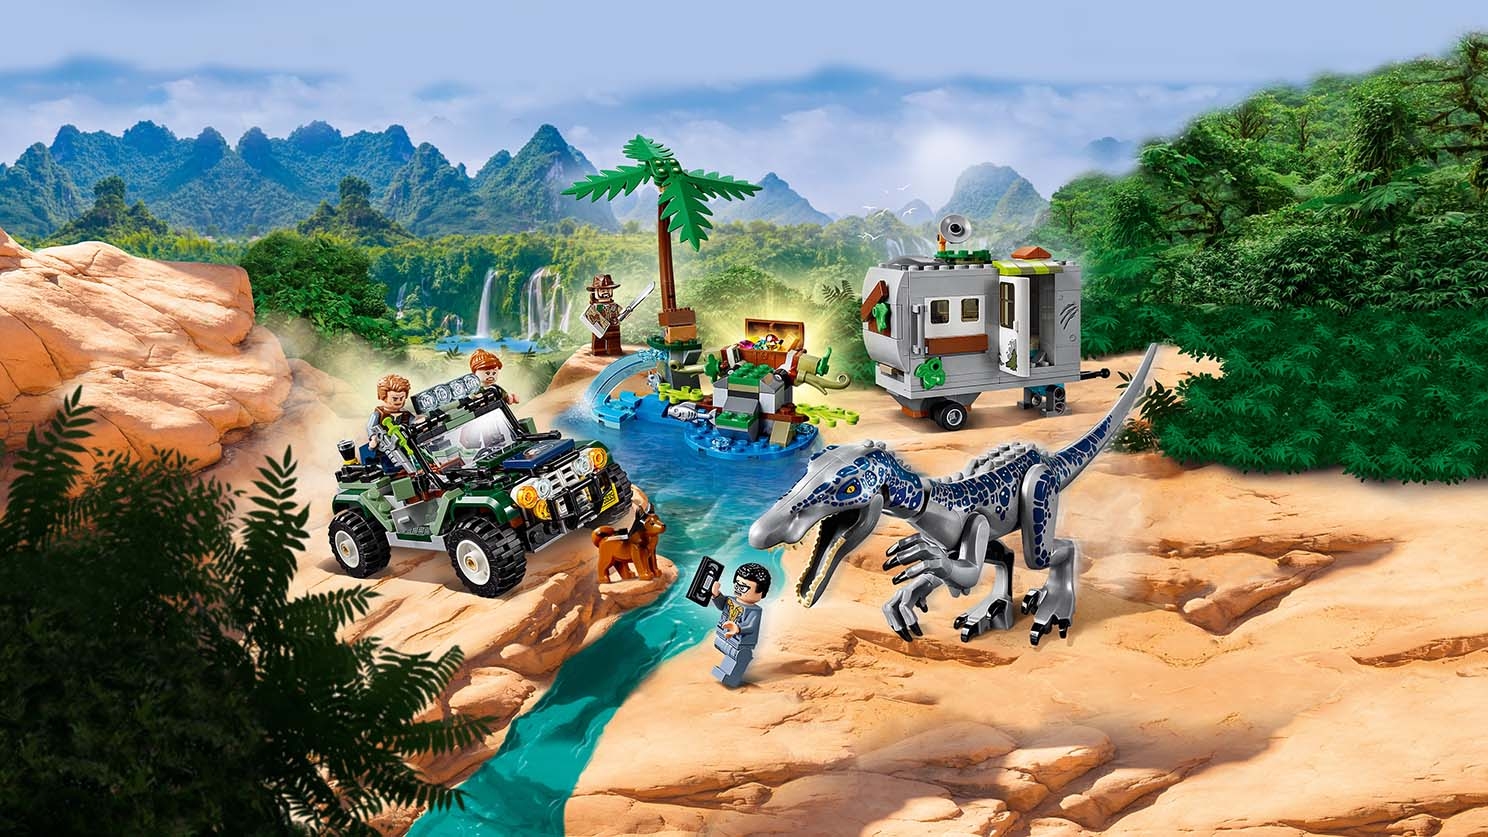 The Treasure Hunt 759 Lego Jurassic World Baryonyx Face Off 